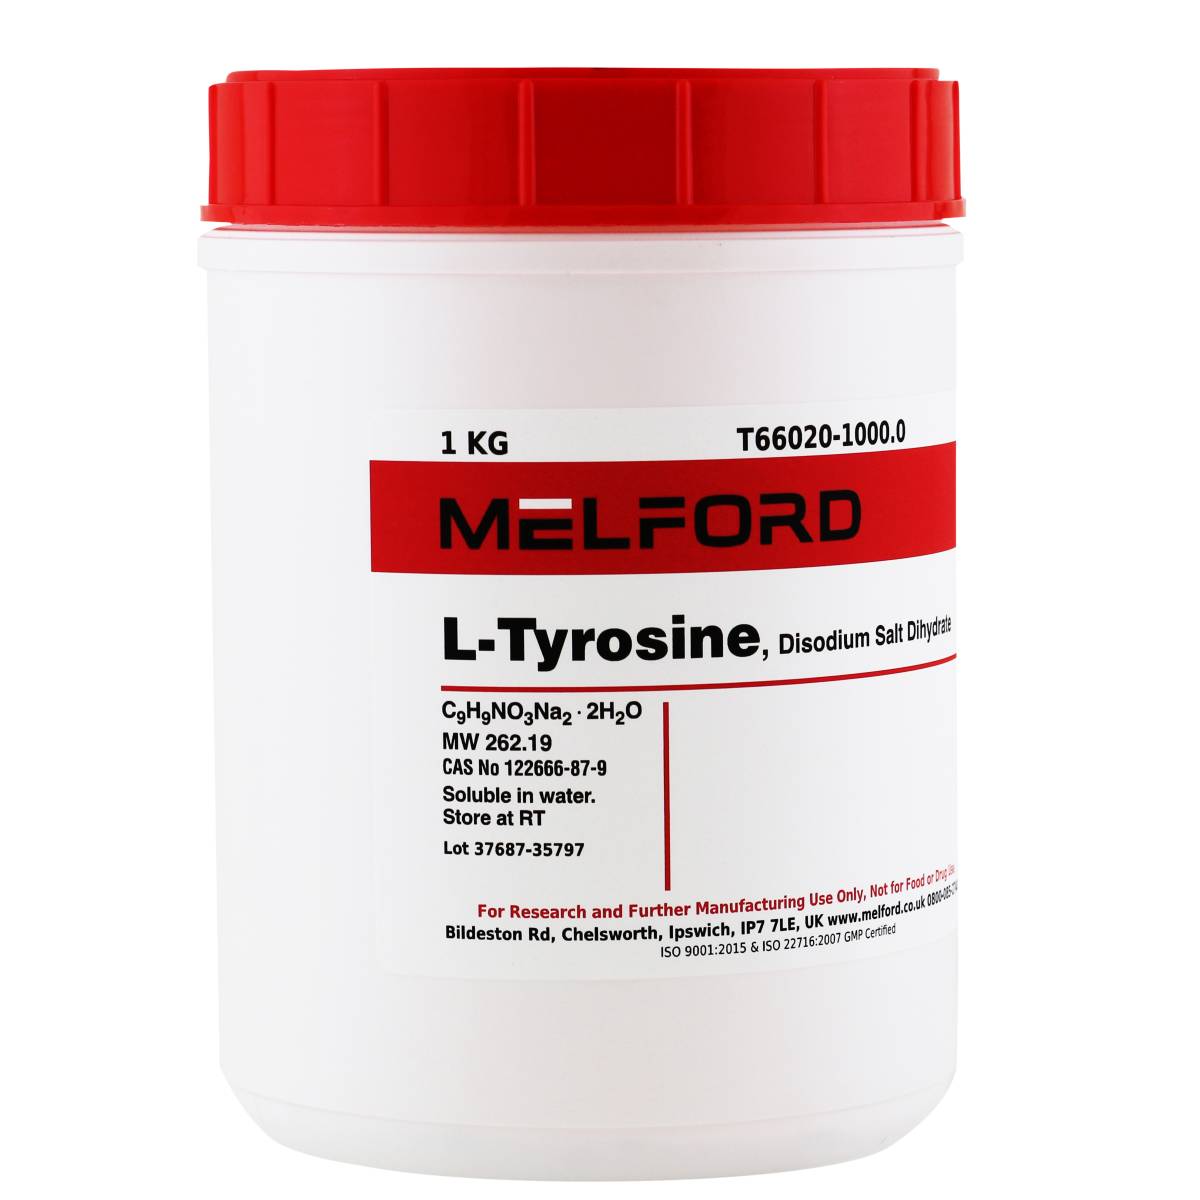 L-Tyrosine, Disodium Salt Dihydrate, 1 Kilogram